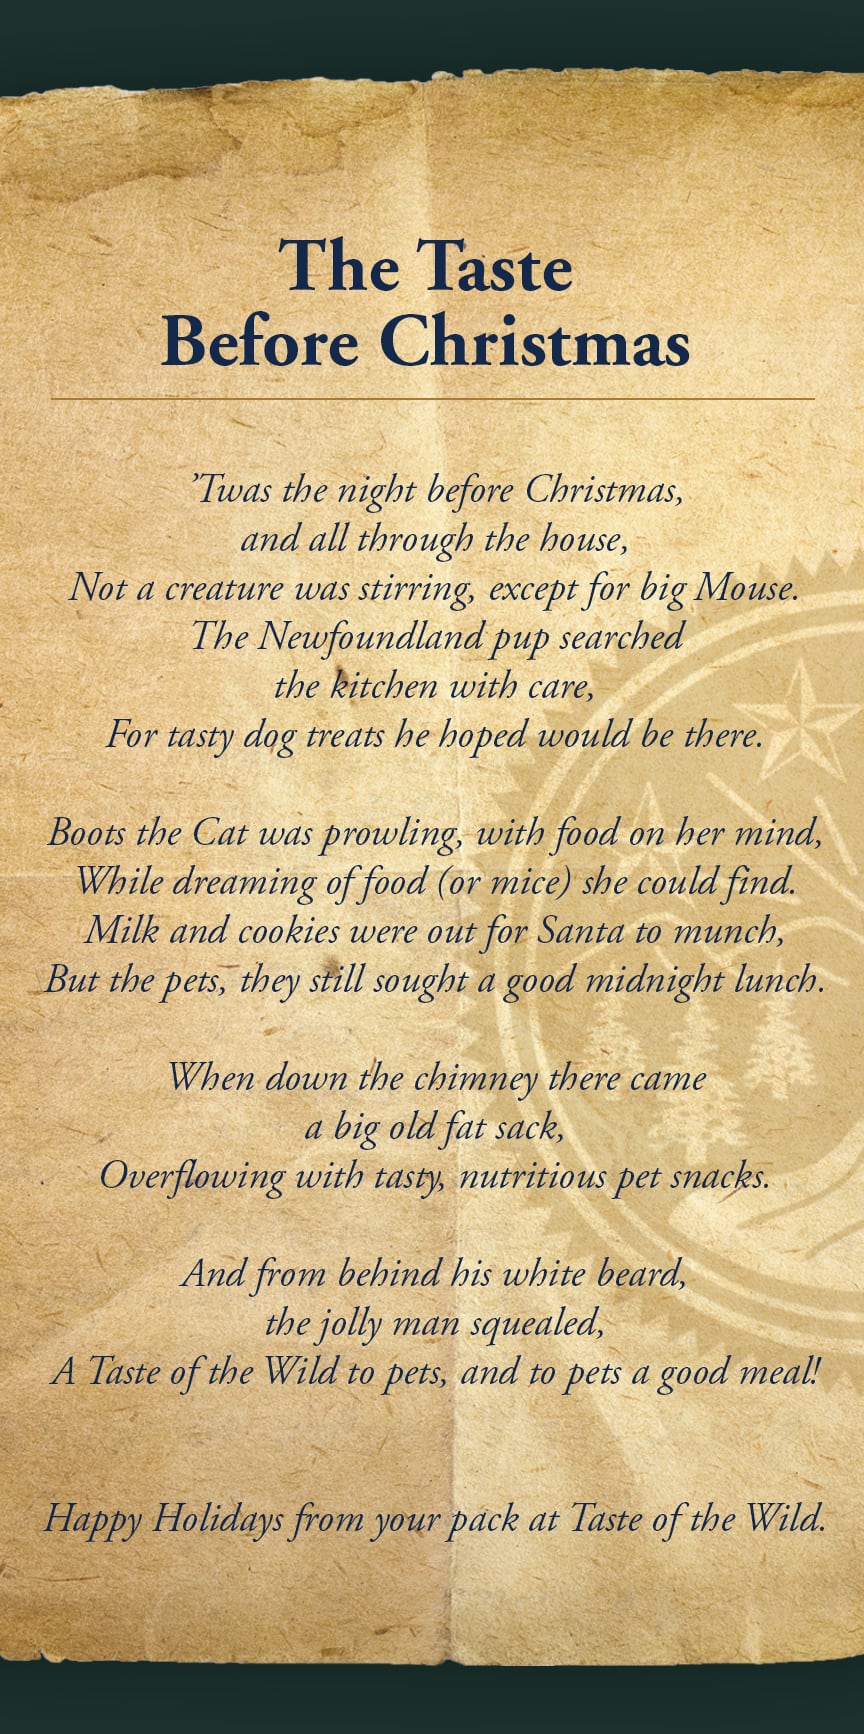 Taste of the Wild Christmas poem | Taste of the Wild